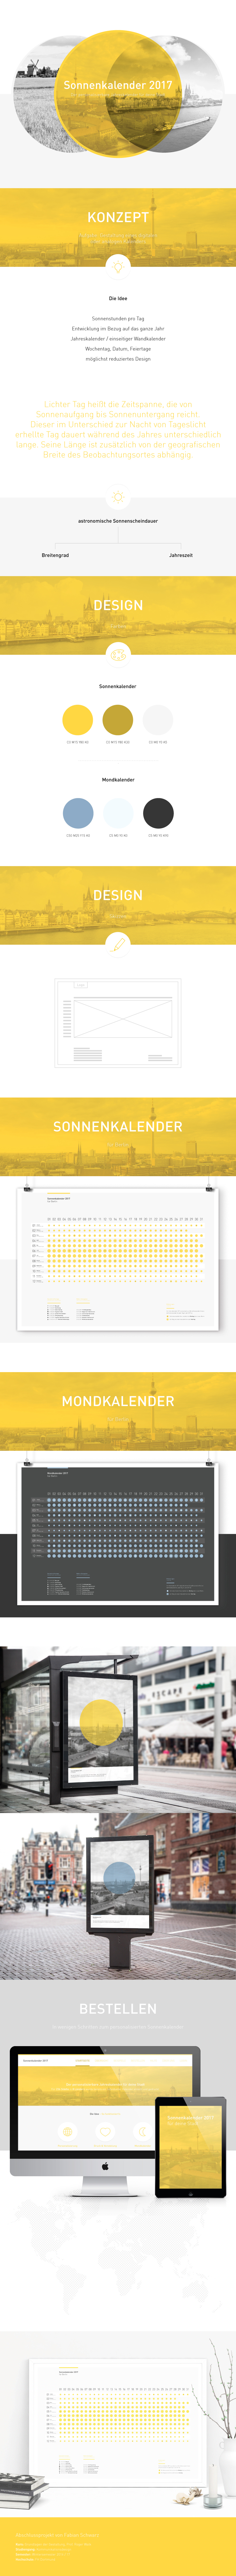 kalender calendar Grafikdesign printdesign print siebdruck sonnenstunden Sonne